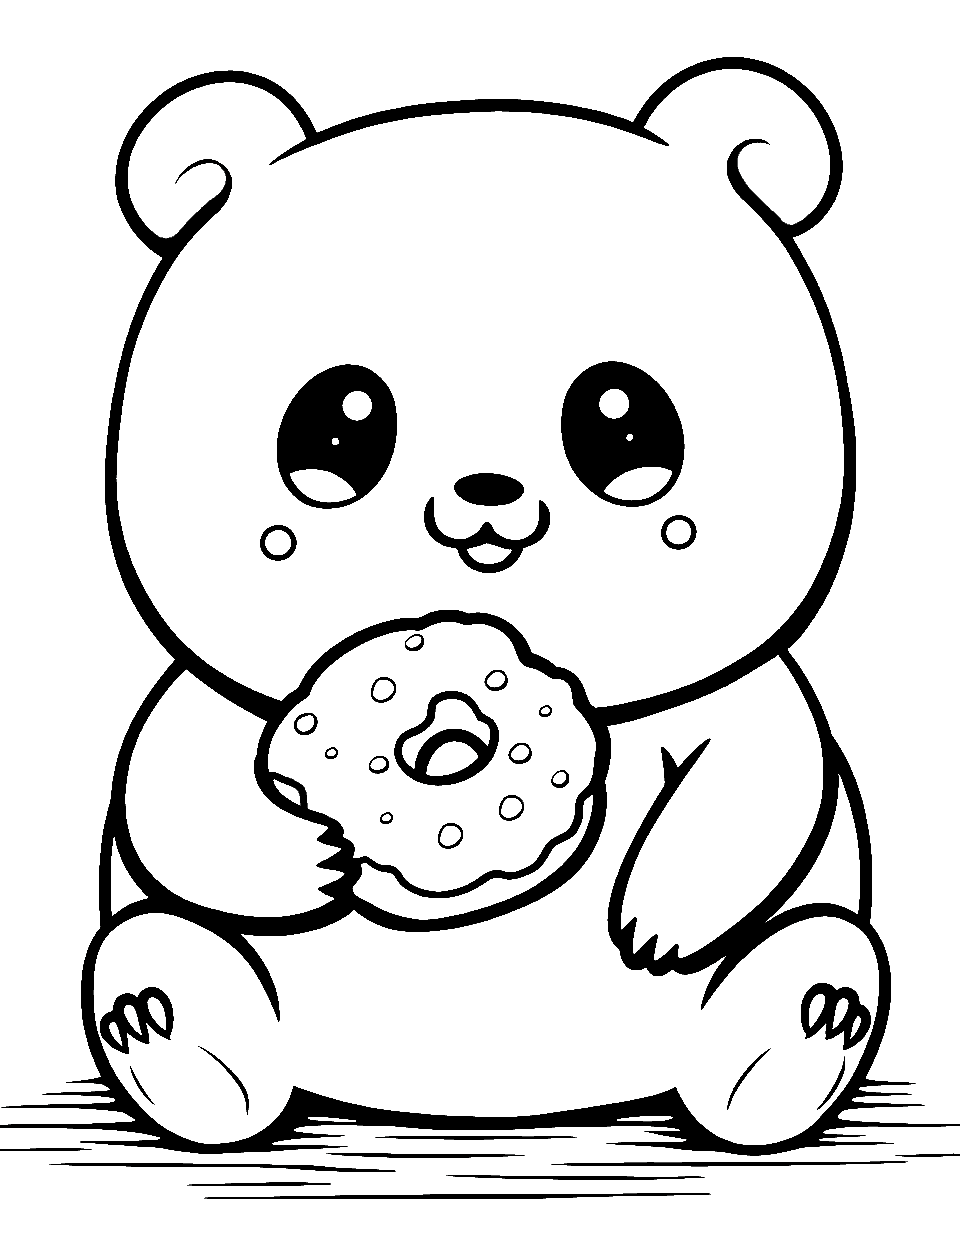 Chibi Panda Eating Donut Coloring Page - A chibi-style panda joyfully holding a large, sprinkled donut.